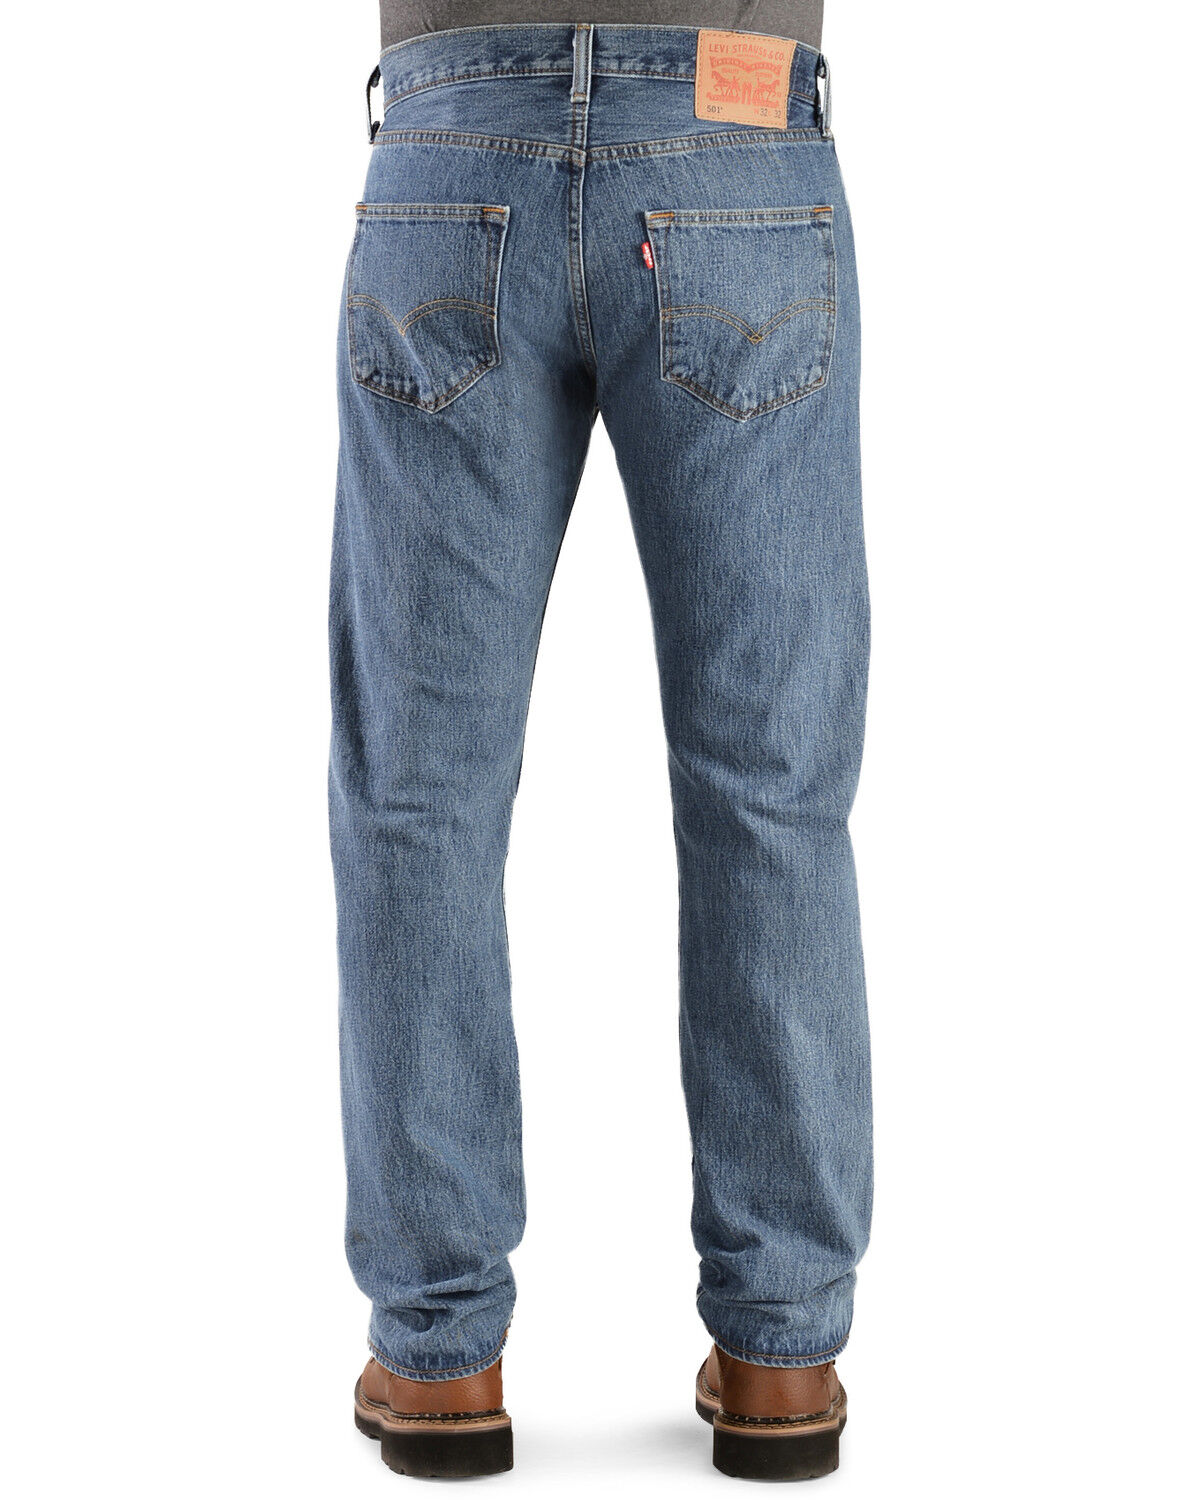 levi's jeans 501 original straight leg